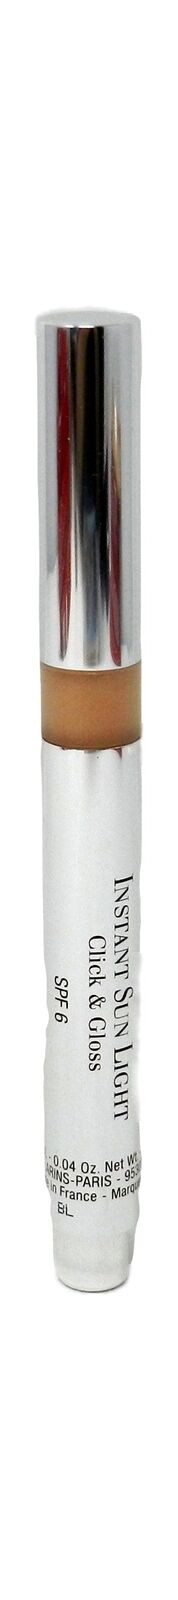 Clarins Instant Sun Light SPF 6 Lip Gloss 01 Vanilla 0.04 Ounces